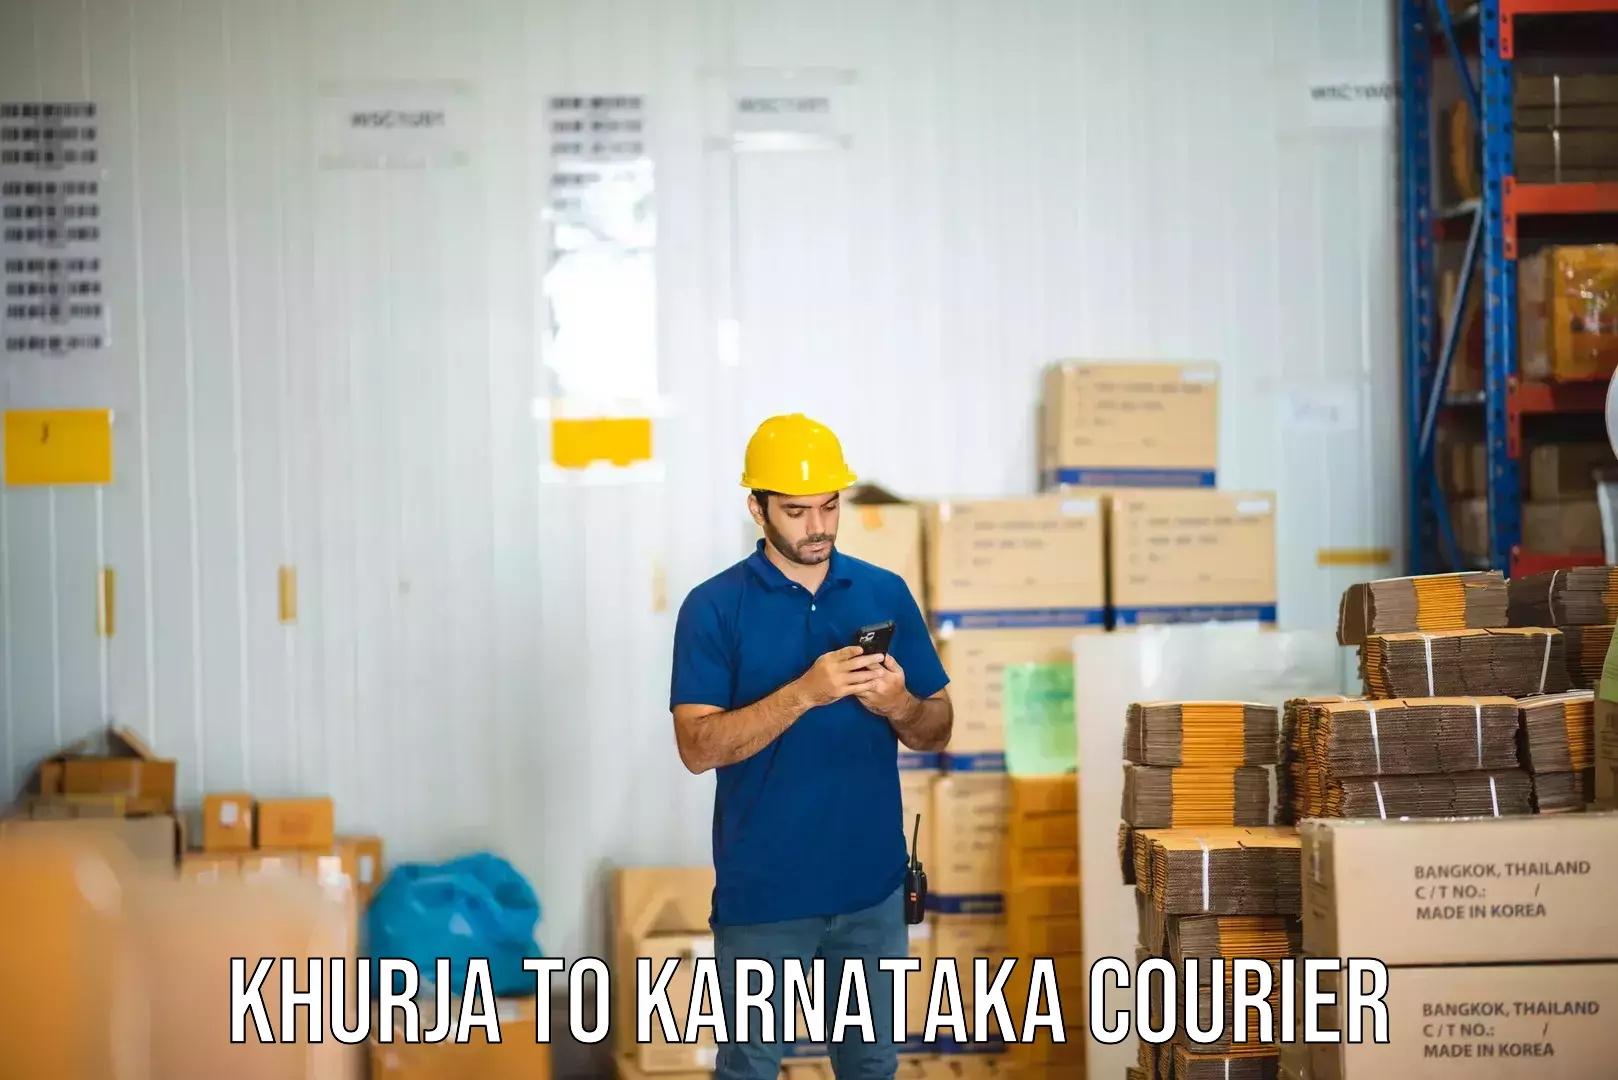 Global courier networks Khurja to Karnataka